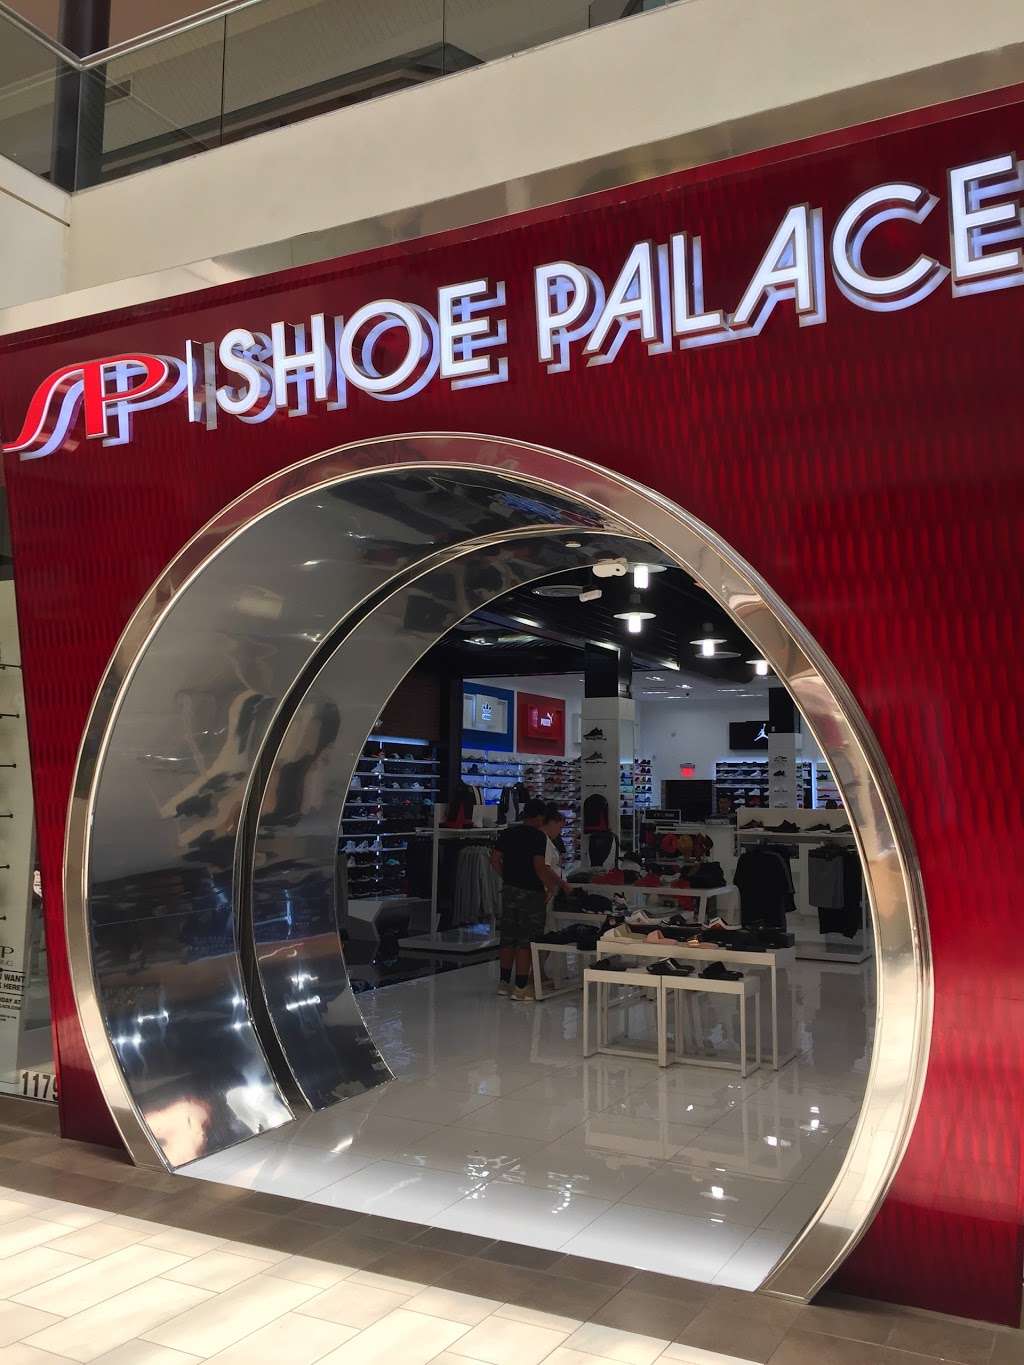 closest shoe palace